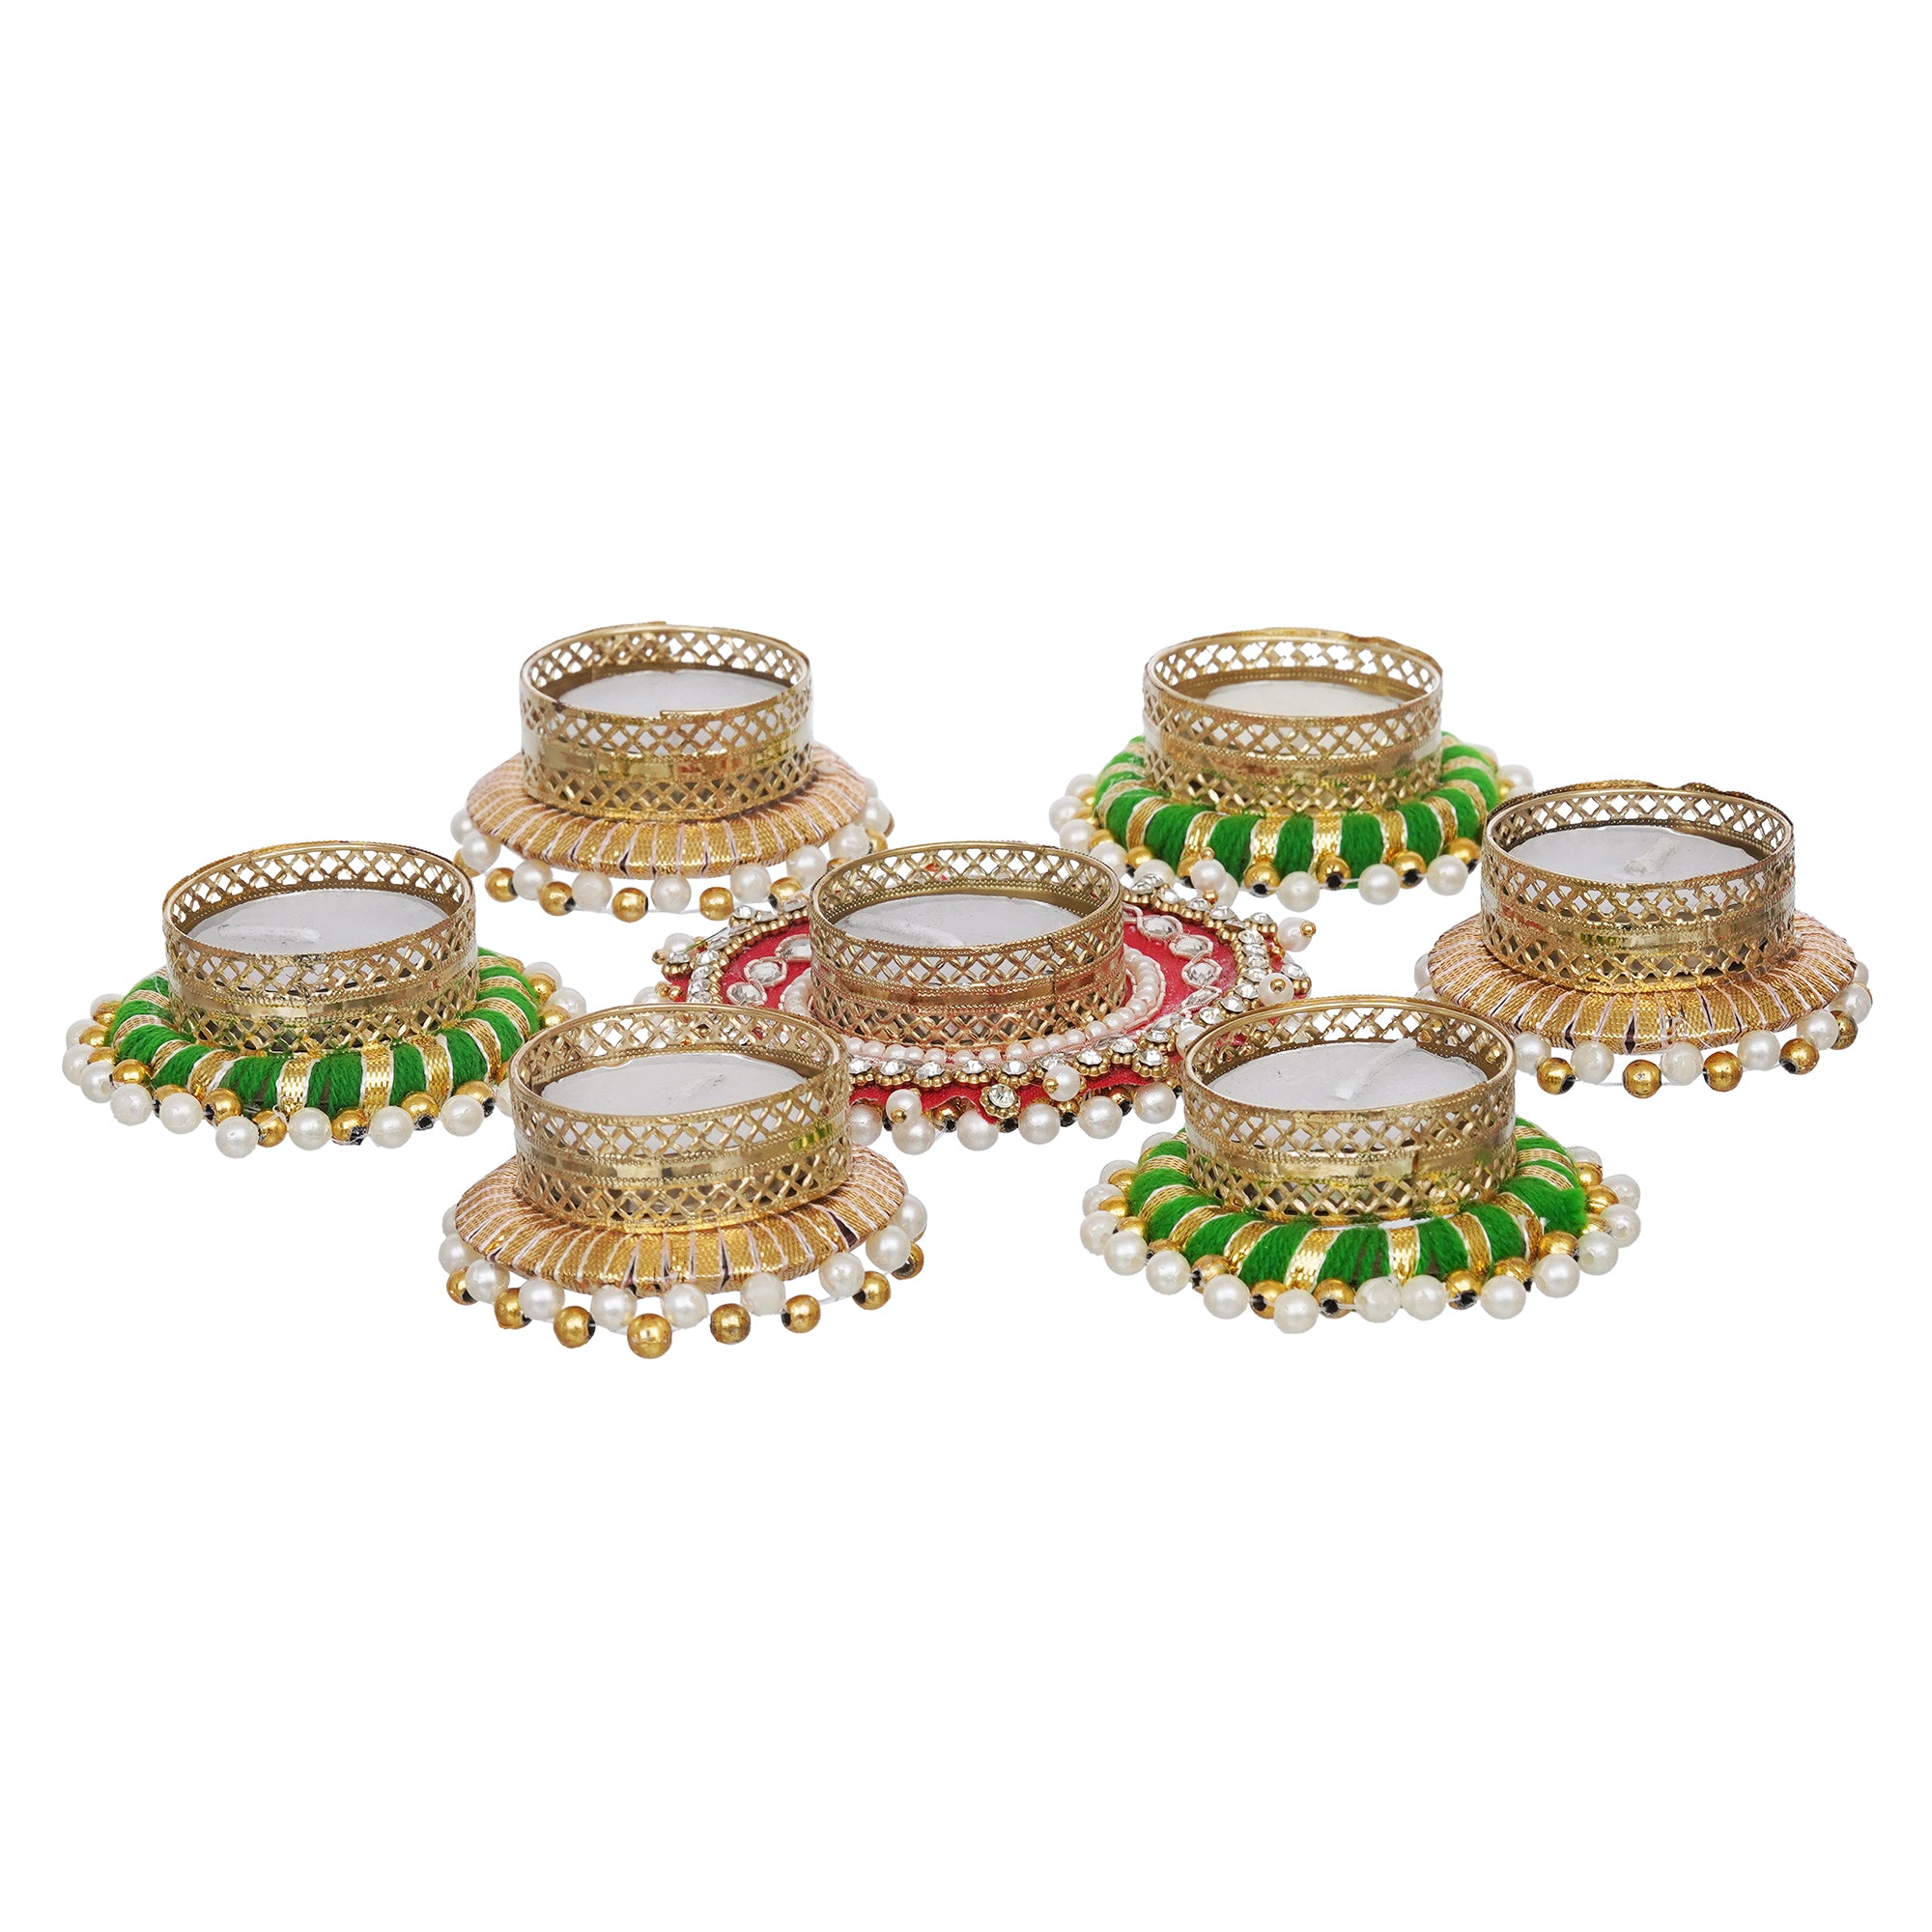 eCraftIndia Set of 7 Round Shaped Diamond Beads and Pearls Decorative Tea Light Candle Holders 8